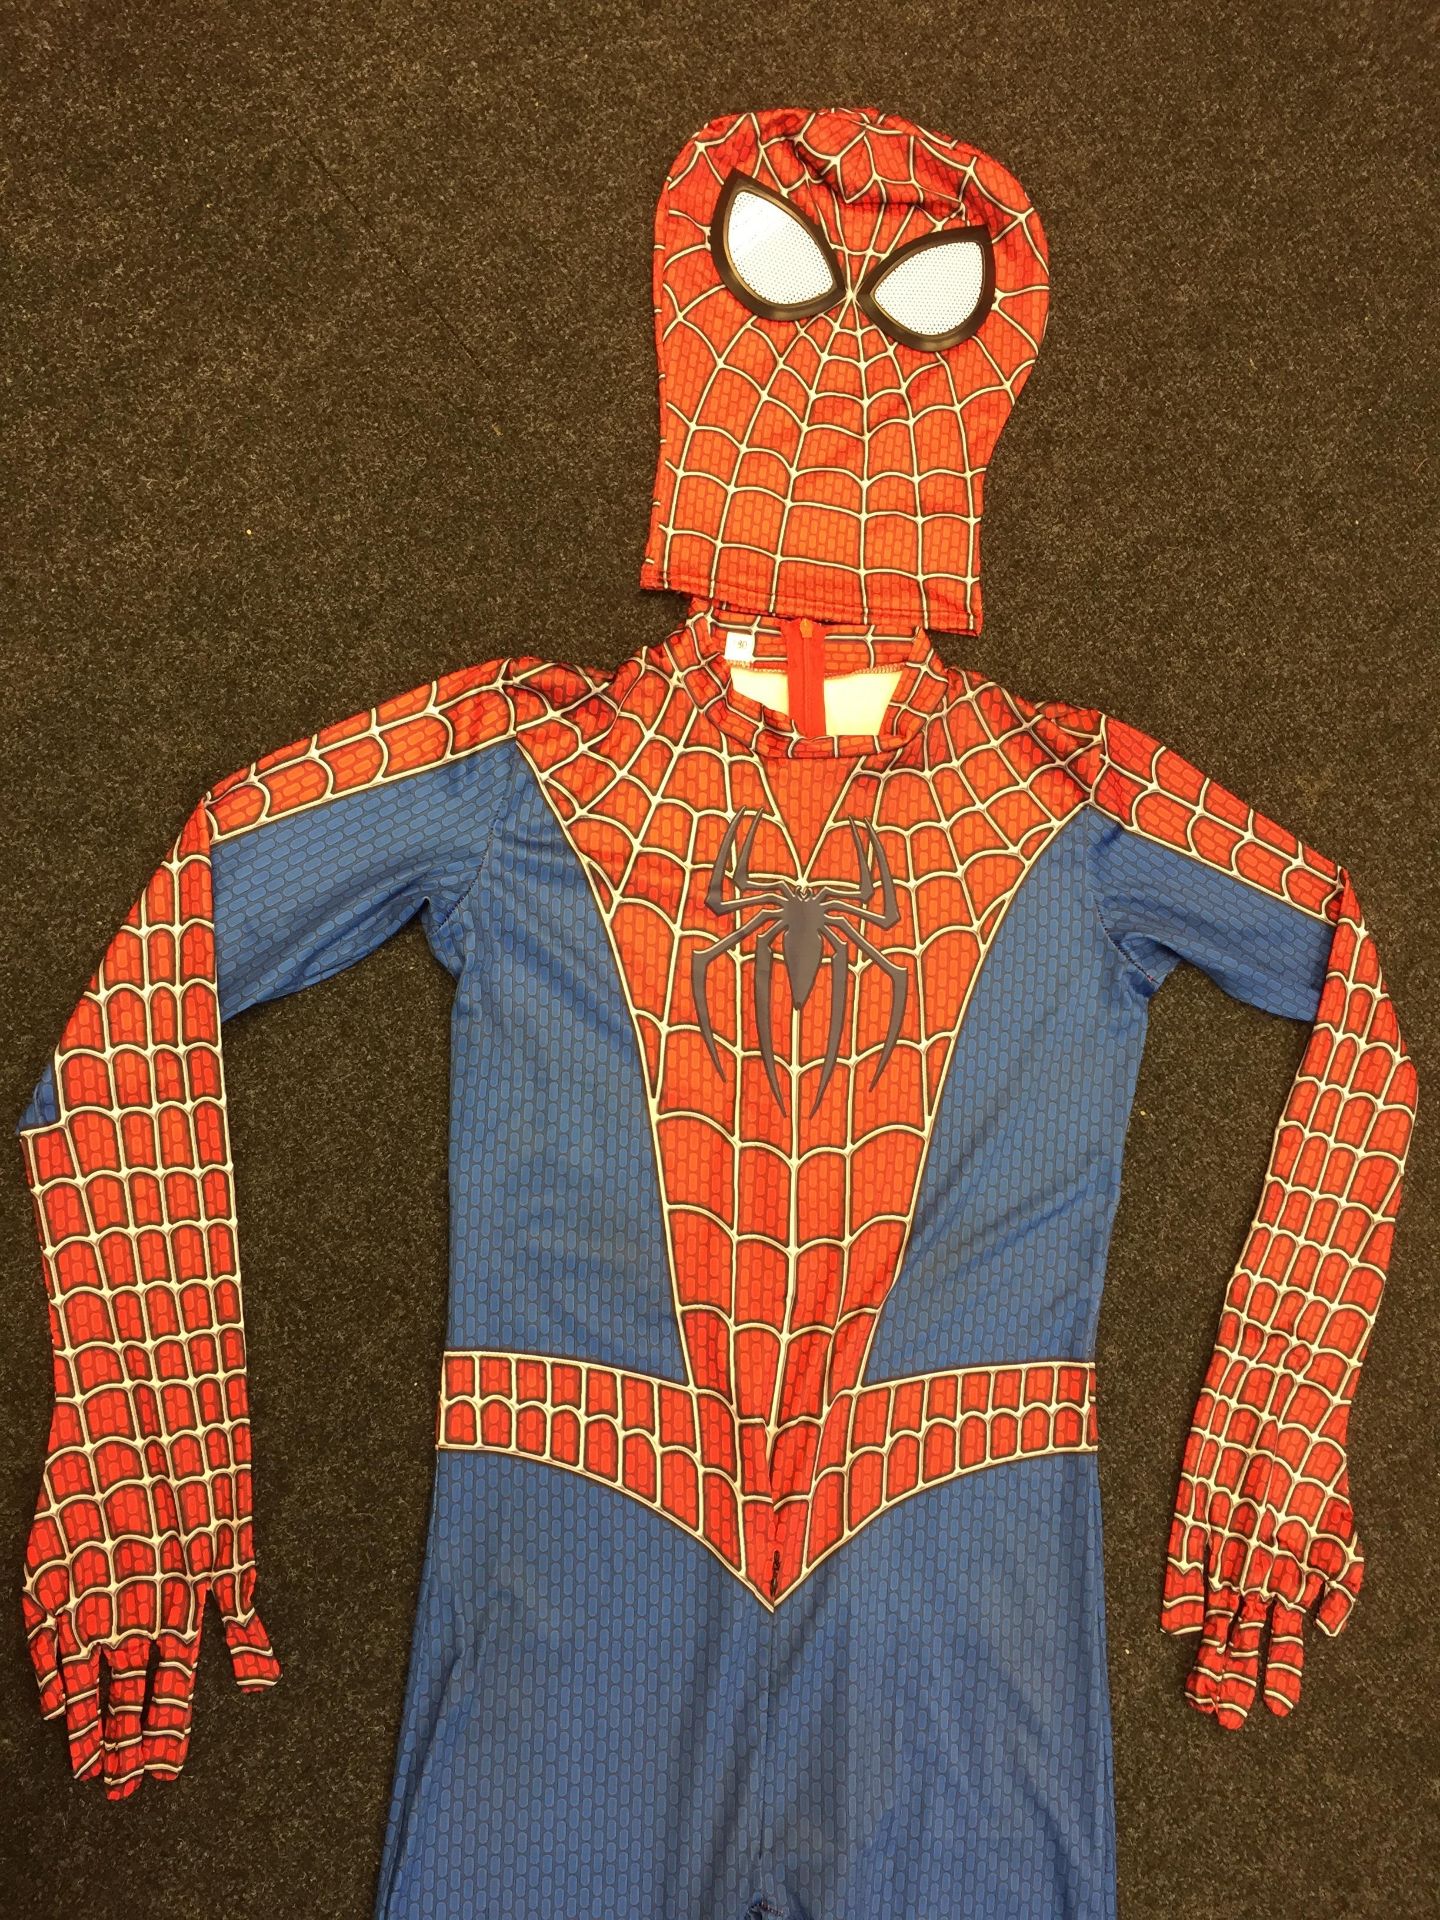 Spiderman Costume - Image 2 of 3